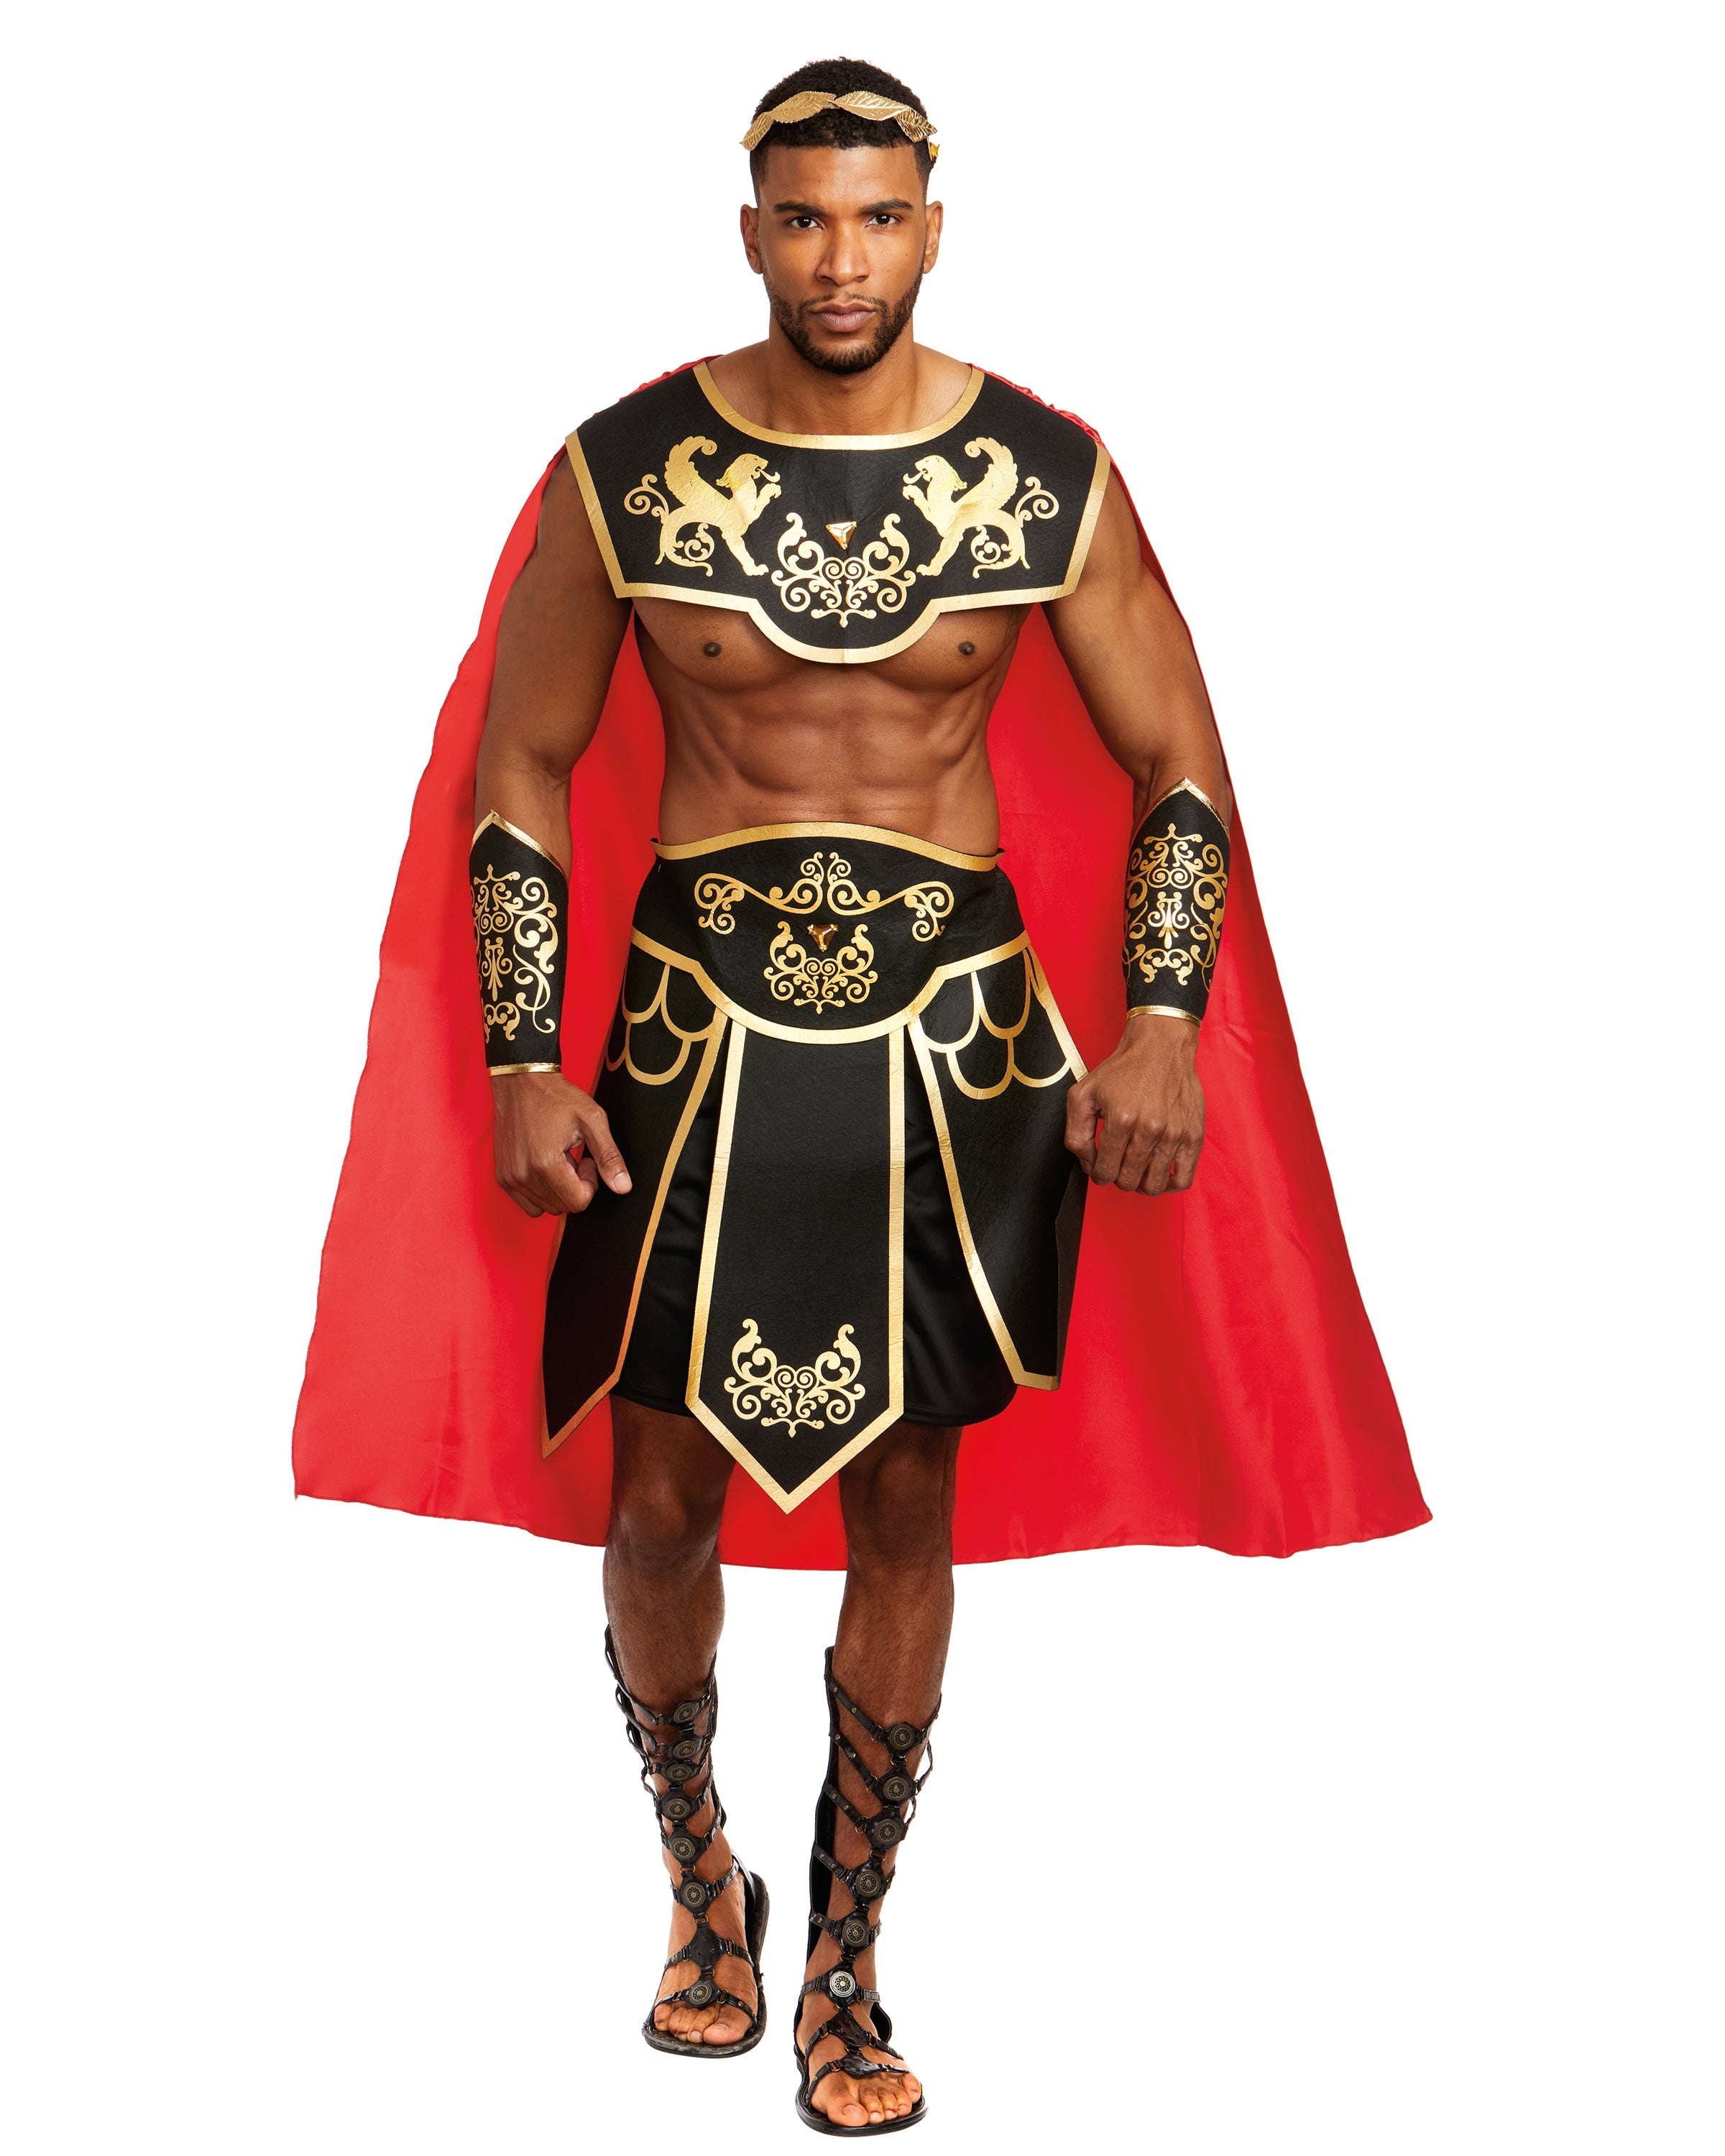 Julius Caesar Men's Costume Dreamgirl International 